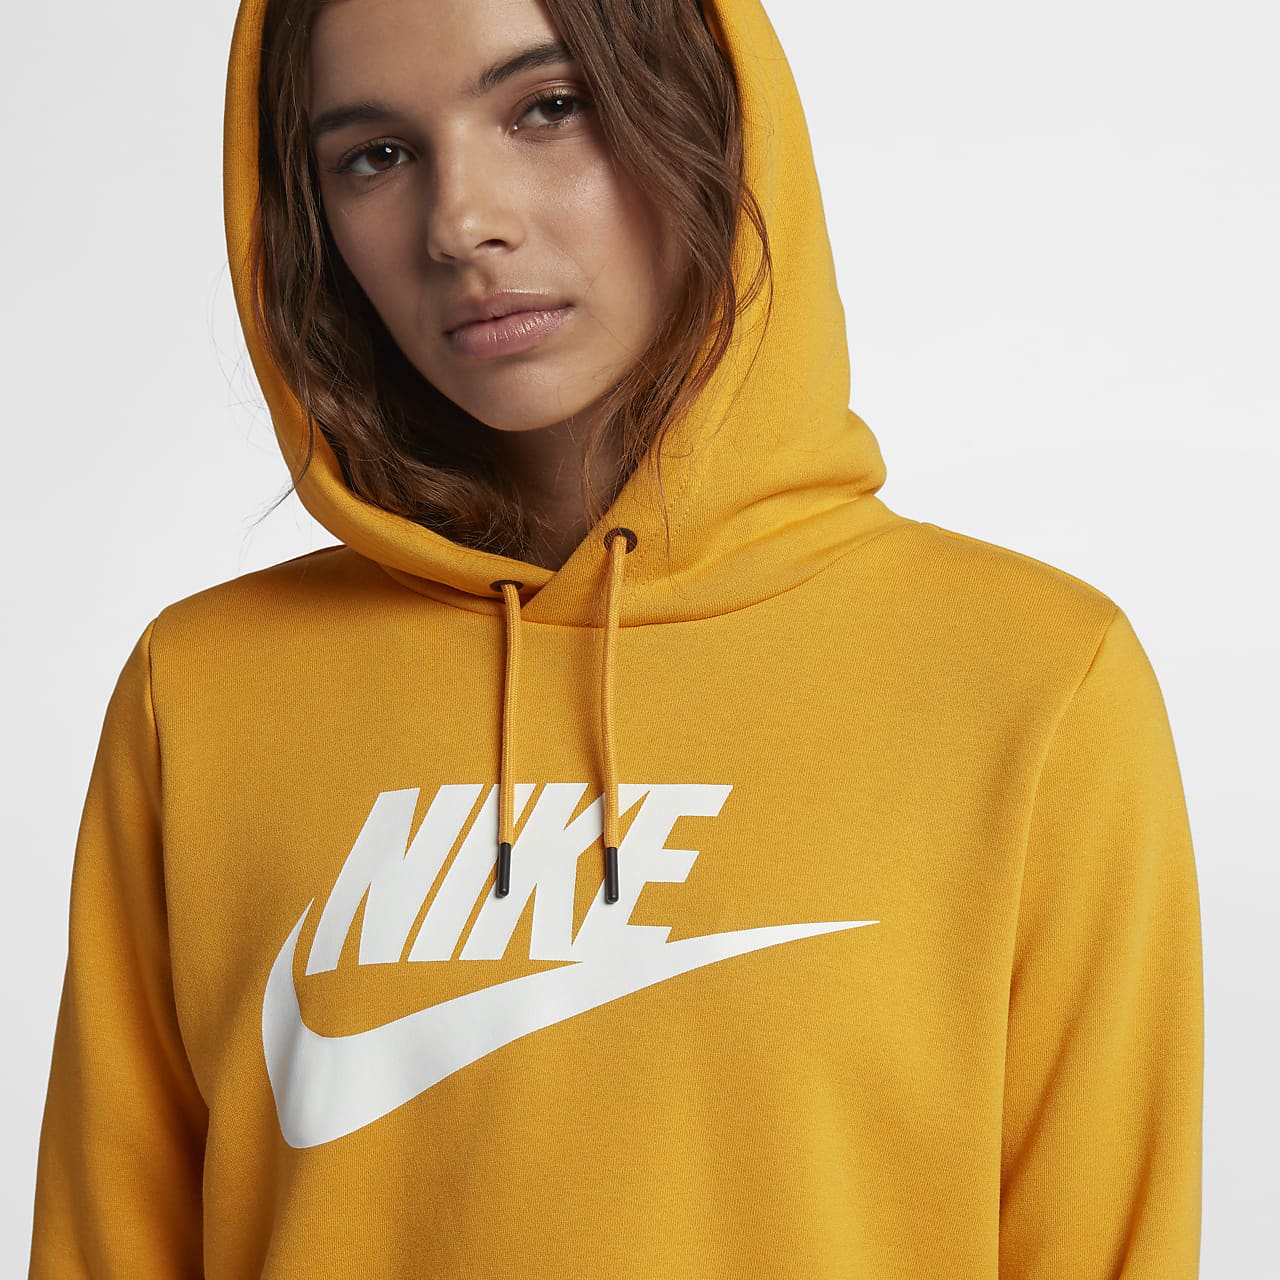 Nike Swoosh Sweatshirt Croptop Women Sweatshirt Small Size Jumper